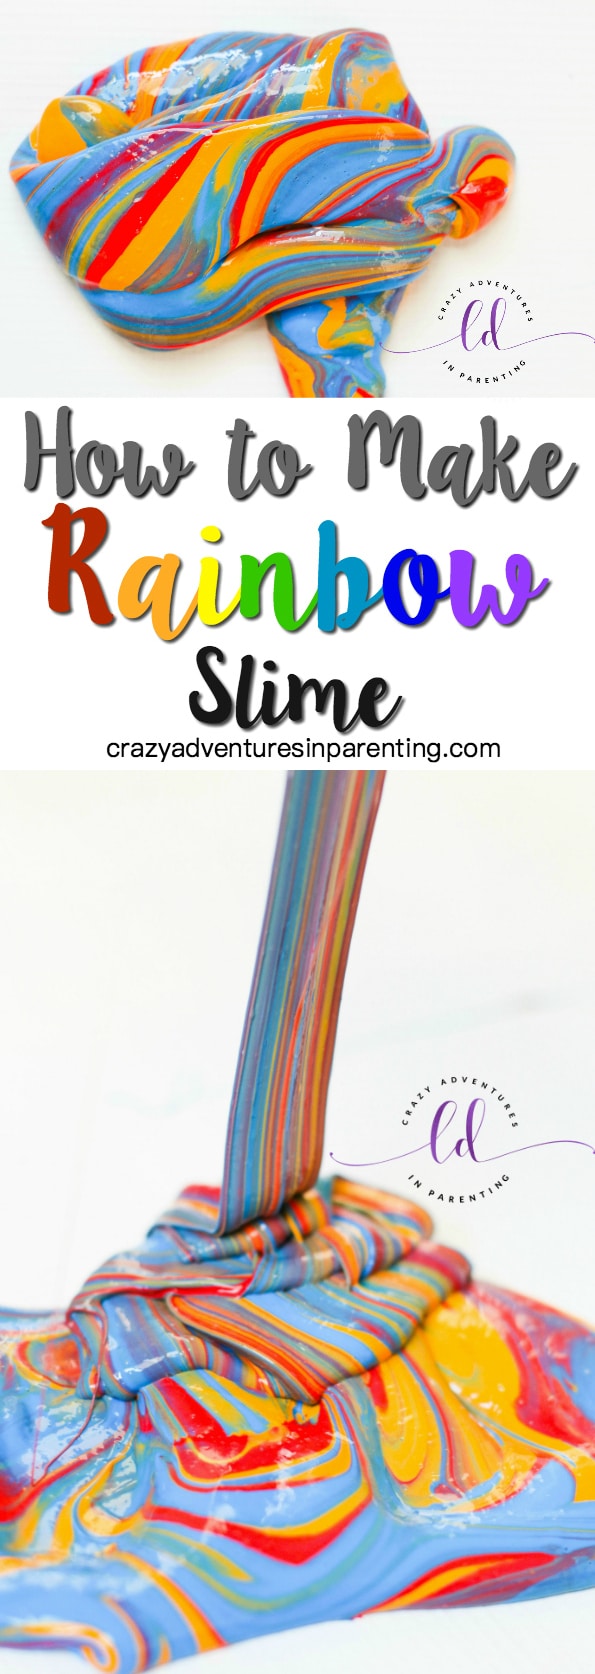 How to make rainbow slime